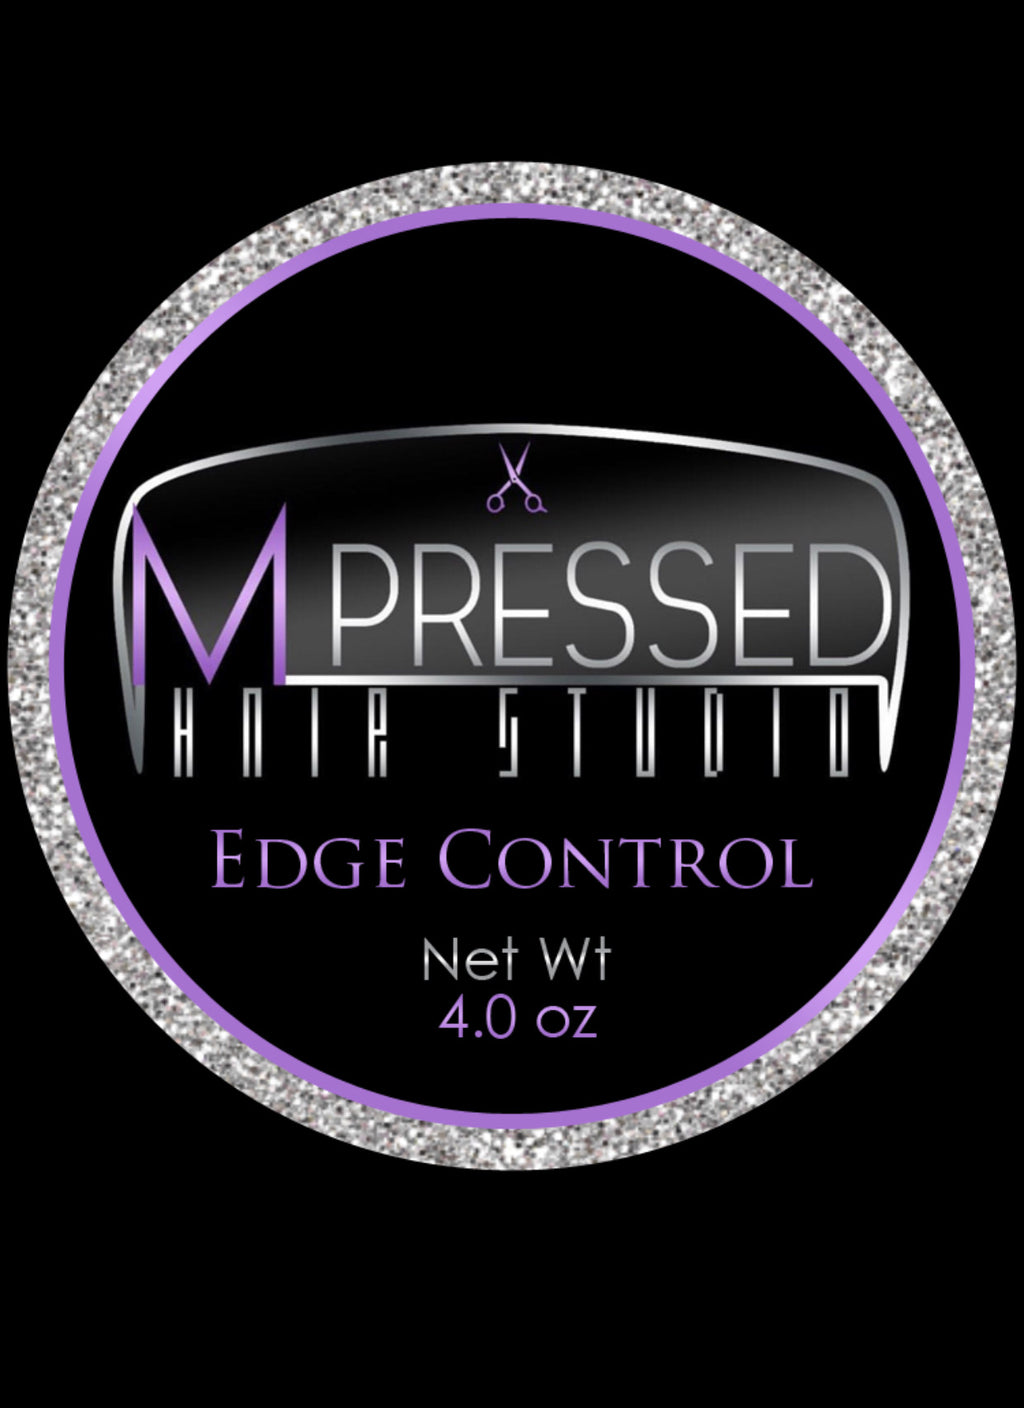 MPressed Edge Control